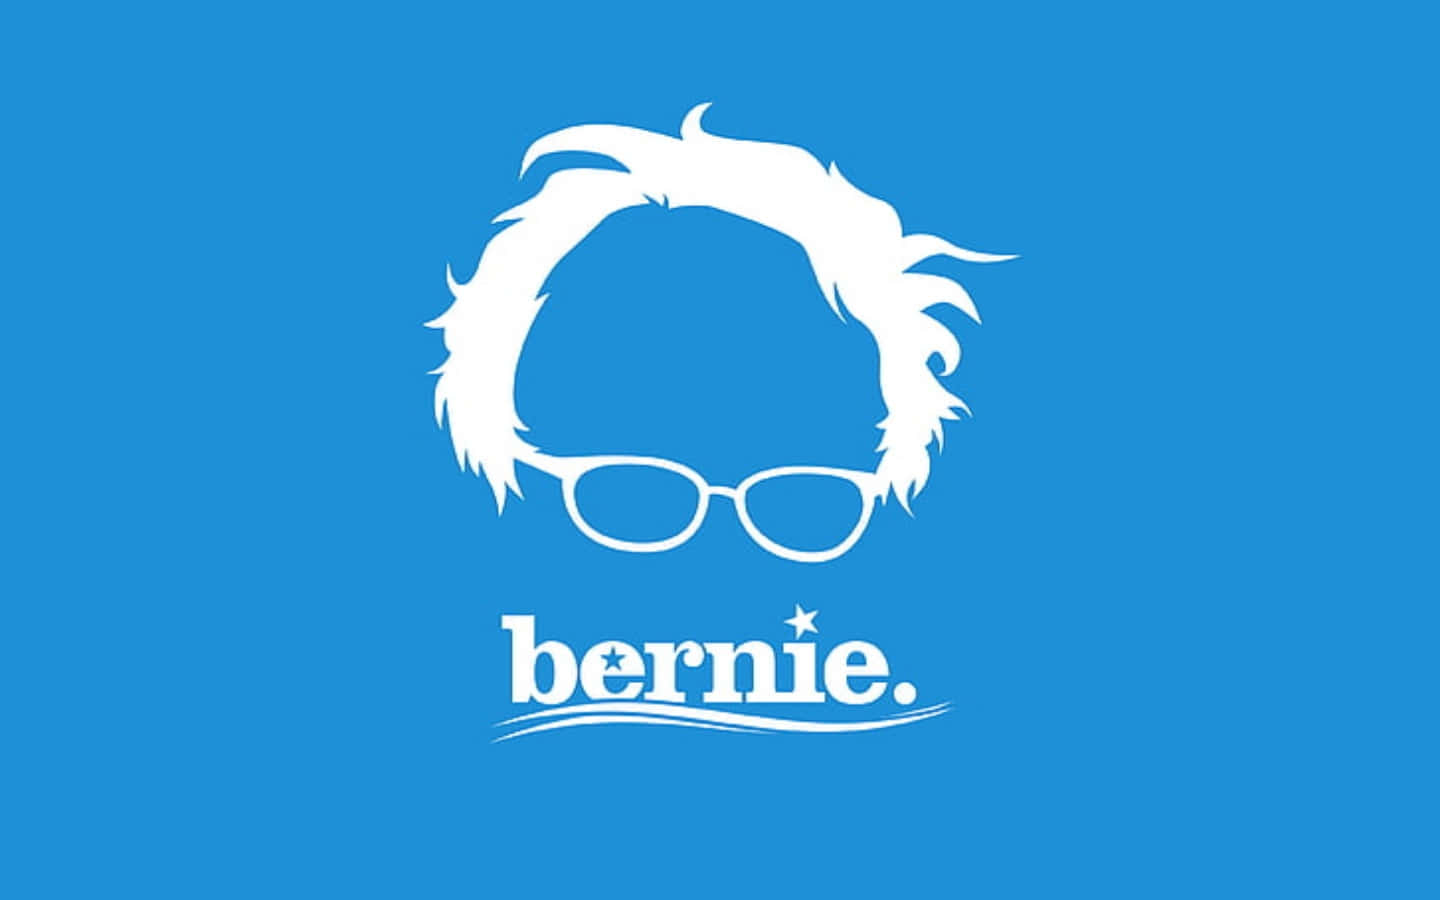 Bernie Sanders Iconic Hairand Glasses Wallpaper